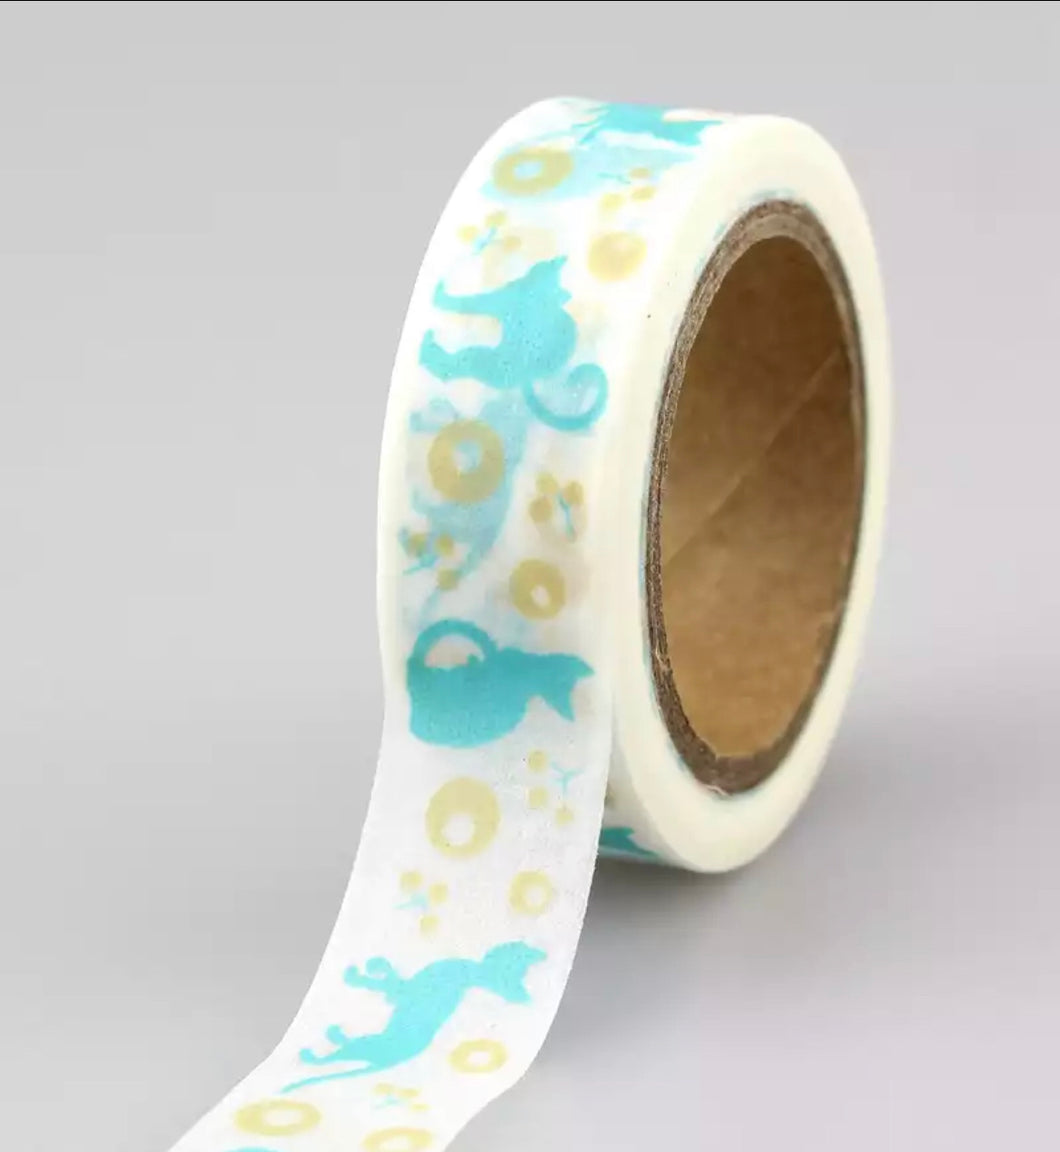 Teal Cat Washi Tape